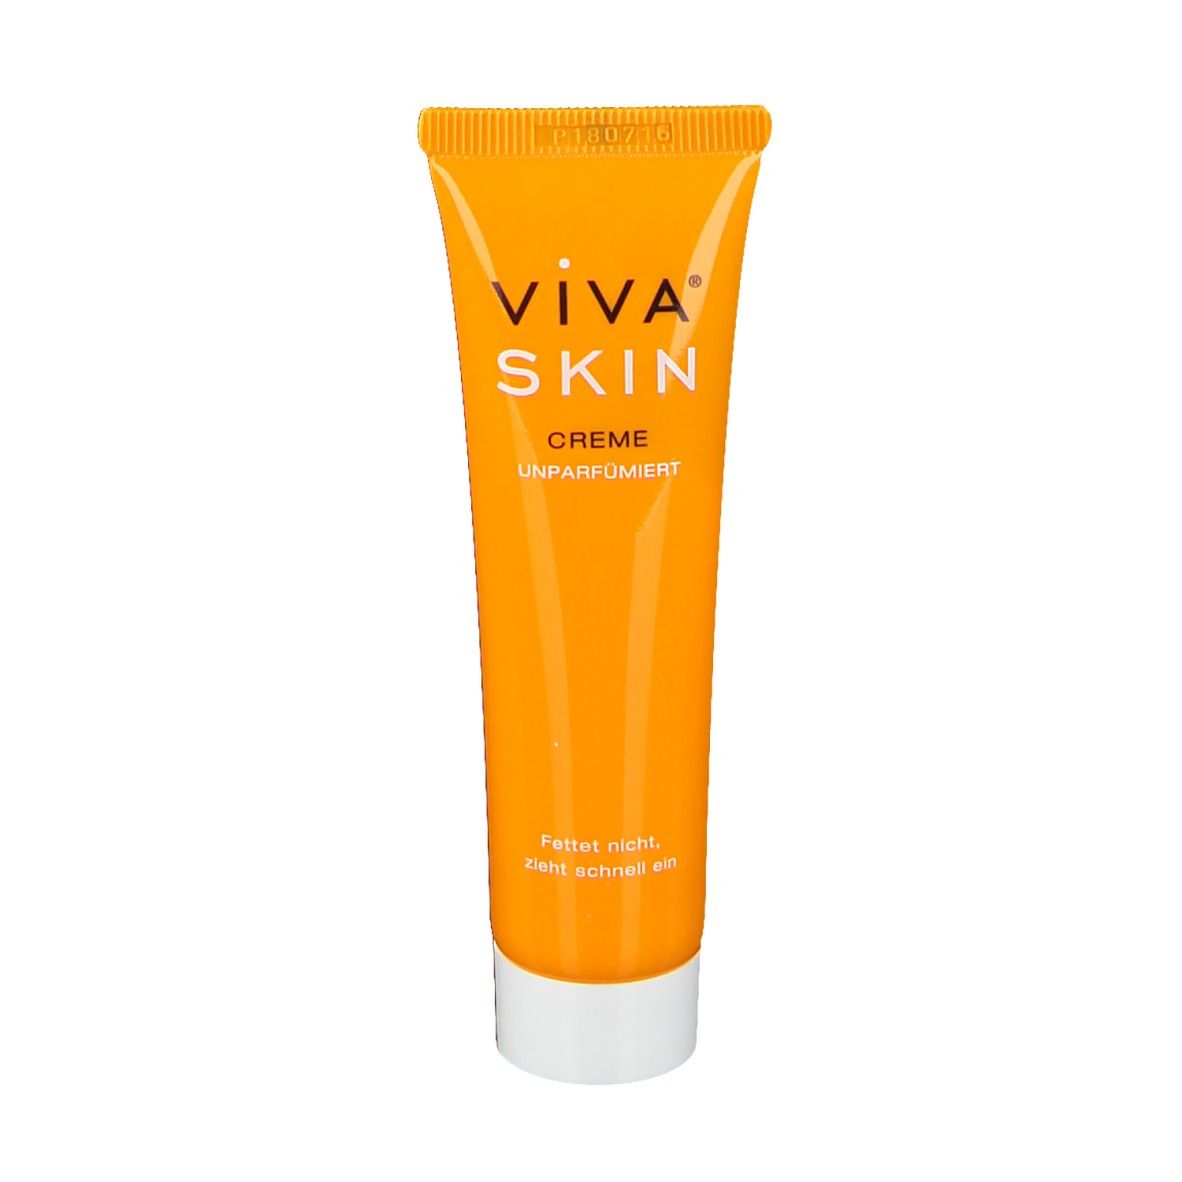 ViVA® Skin Creme unparfümiert